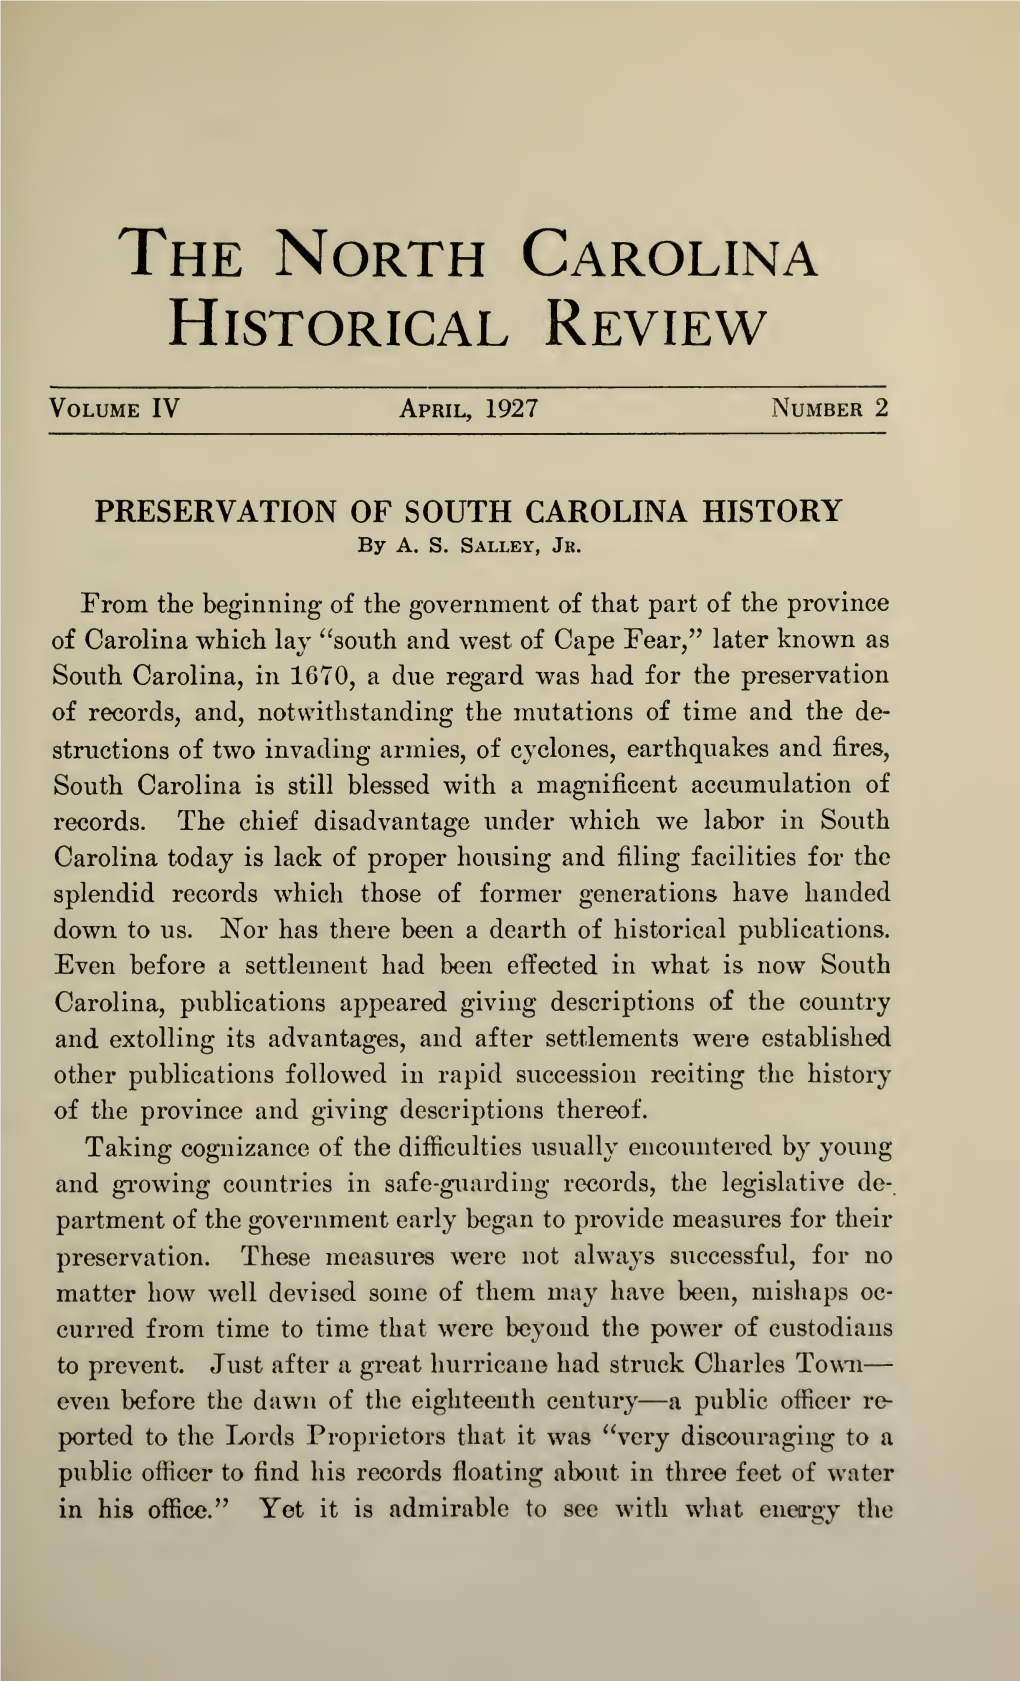 The North Carolina Historical Review